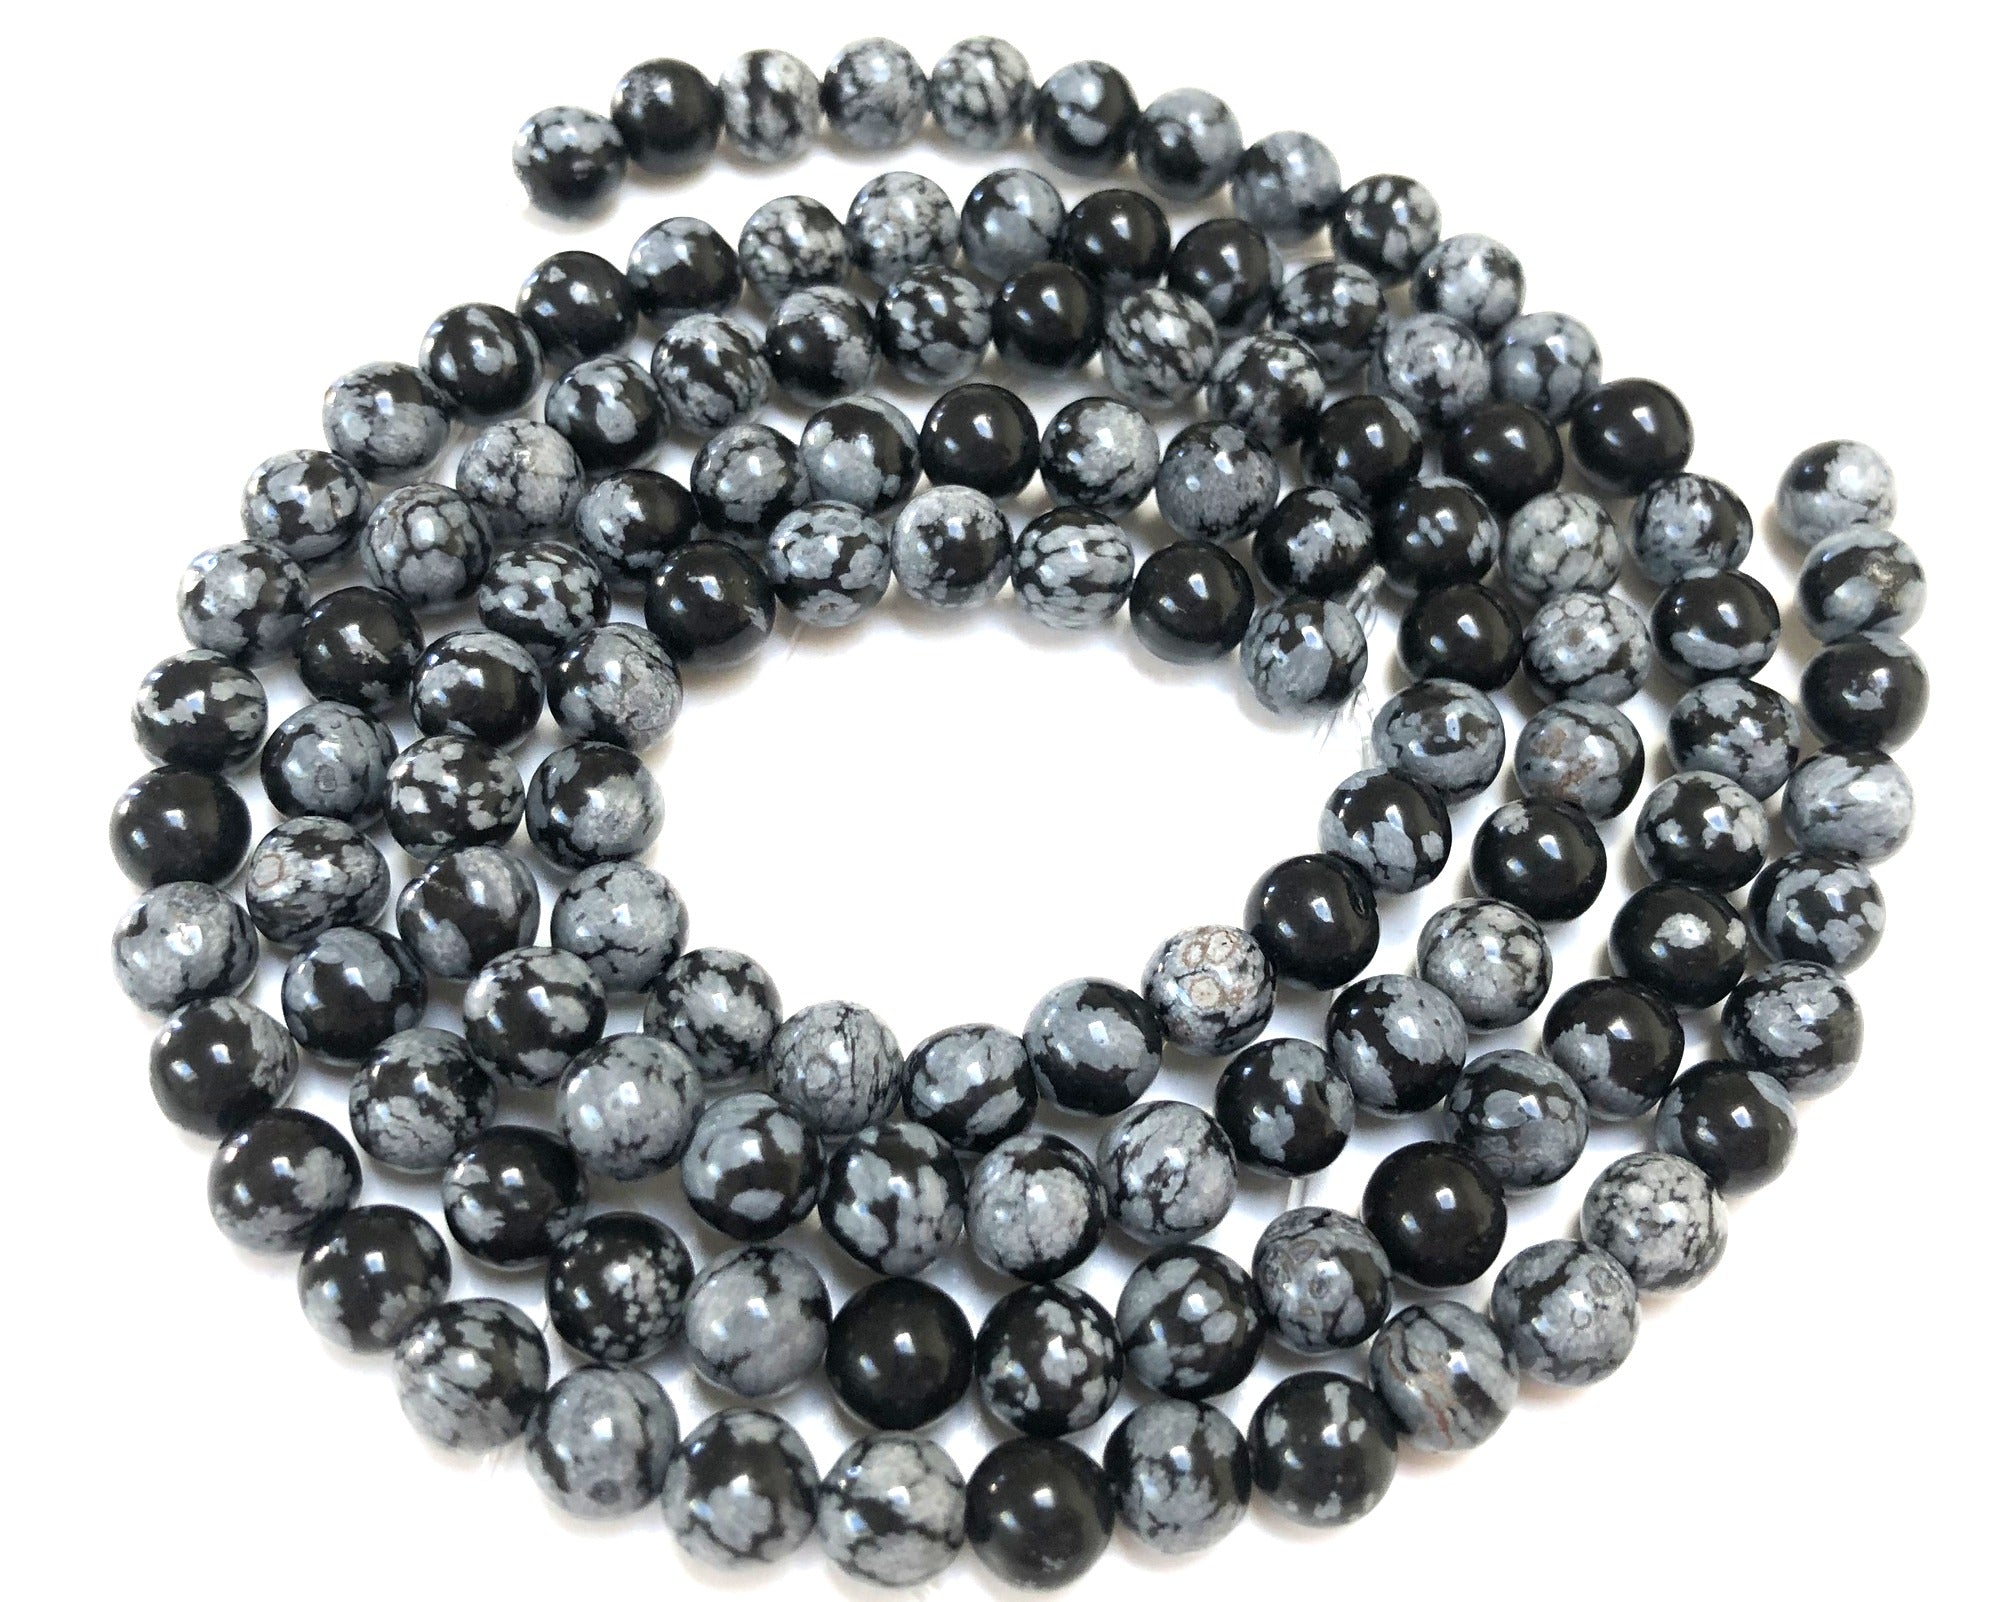 Snowflake Obsidian polished 6mm round gemstone beads 15" strand - Oz Beads 